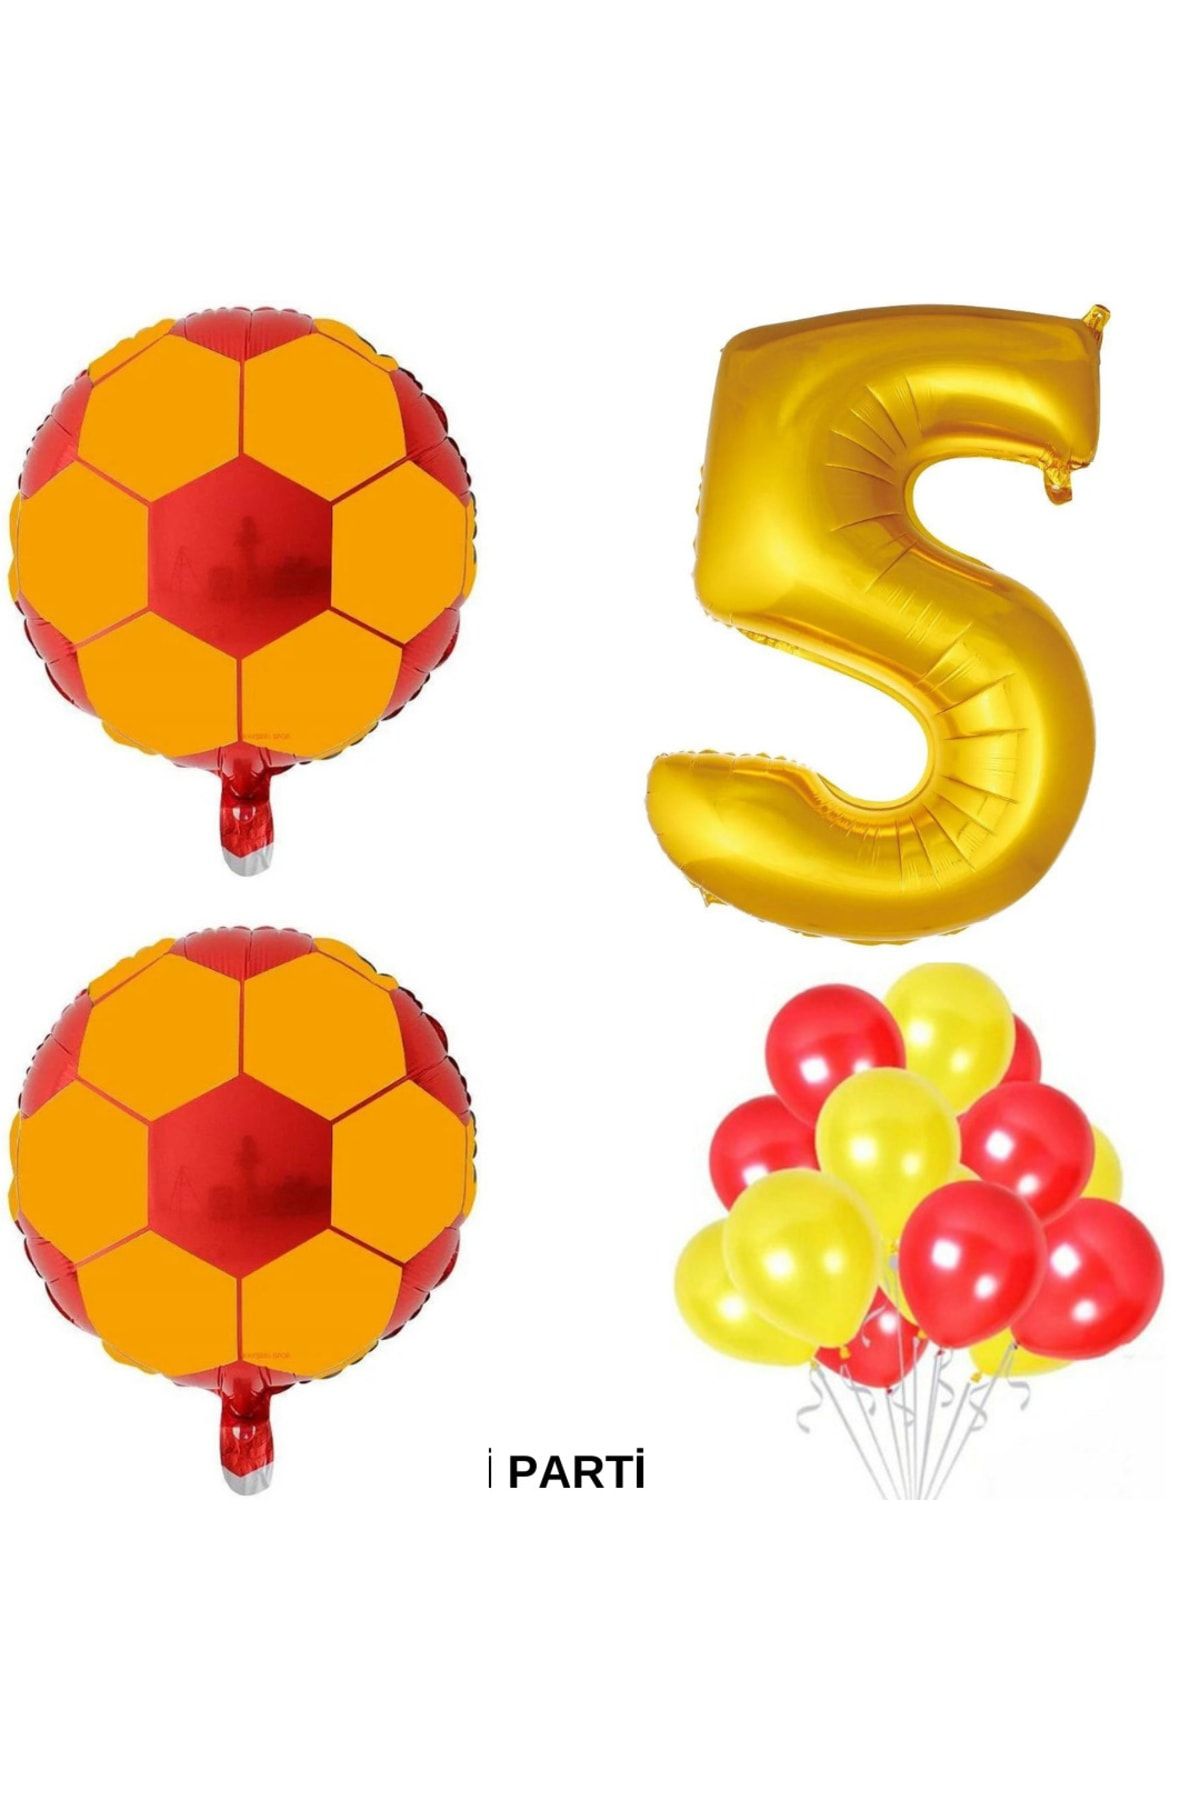 MERİ PARTİ Galatasaray Temalı Doğum Günü Parti Seti Yaş Balonu Sarı Kırmızı Balon Galatasaray Set